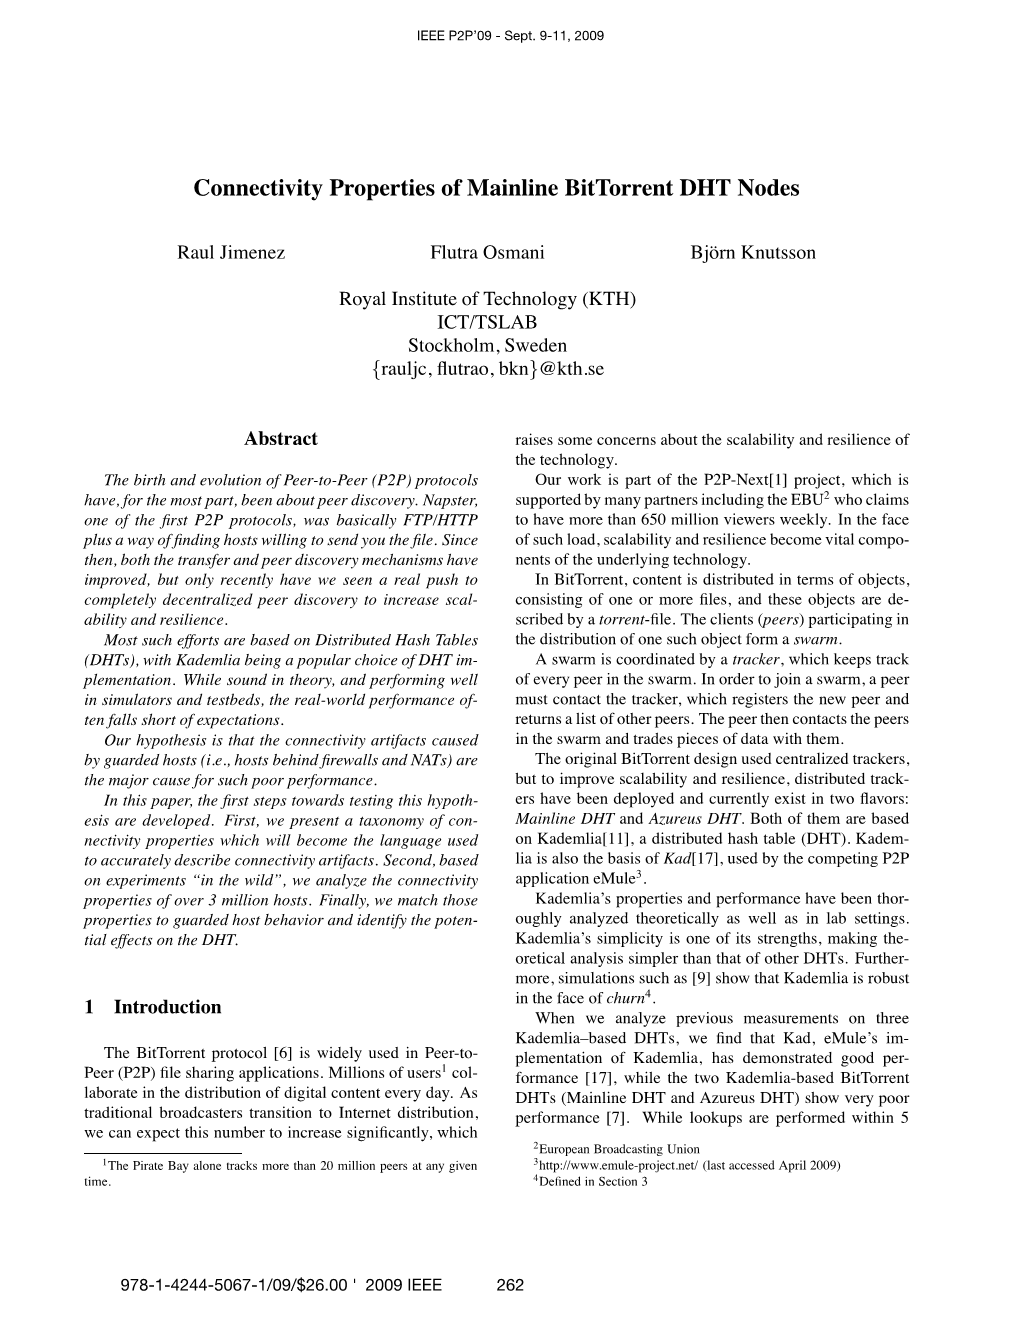 Connectivity Properties of Mainline Bittorrent DHT Nodes